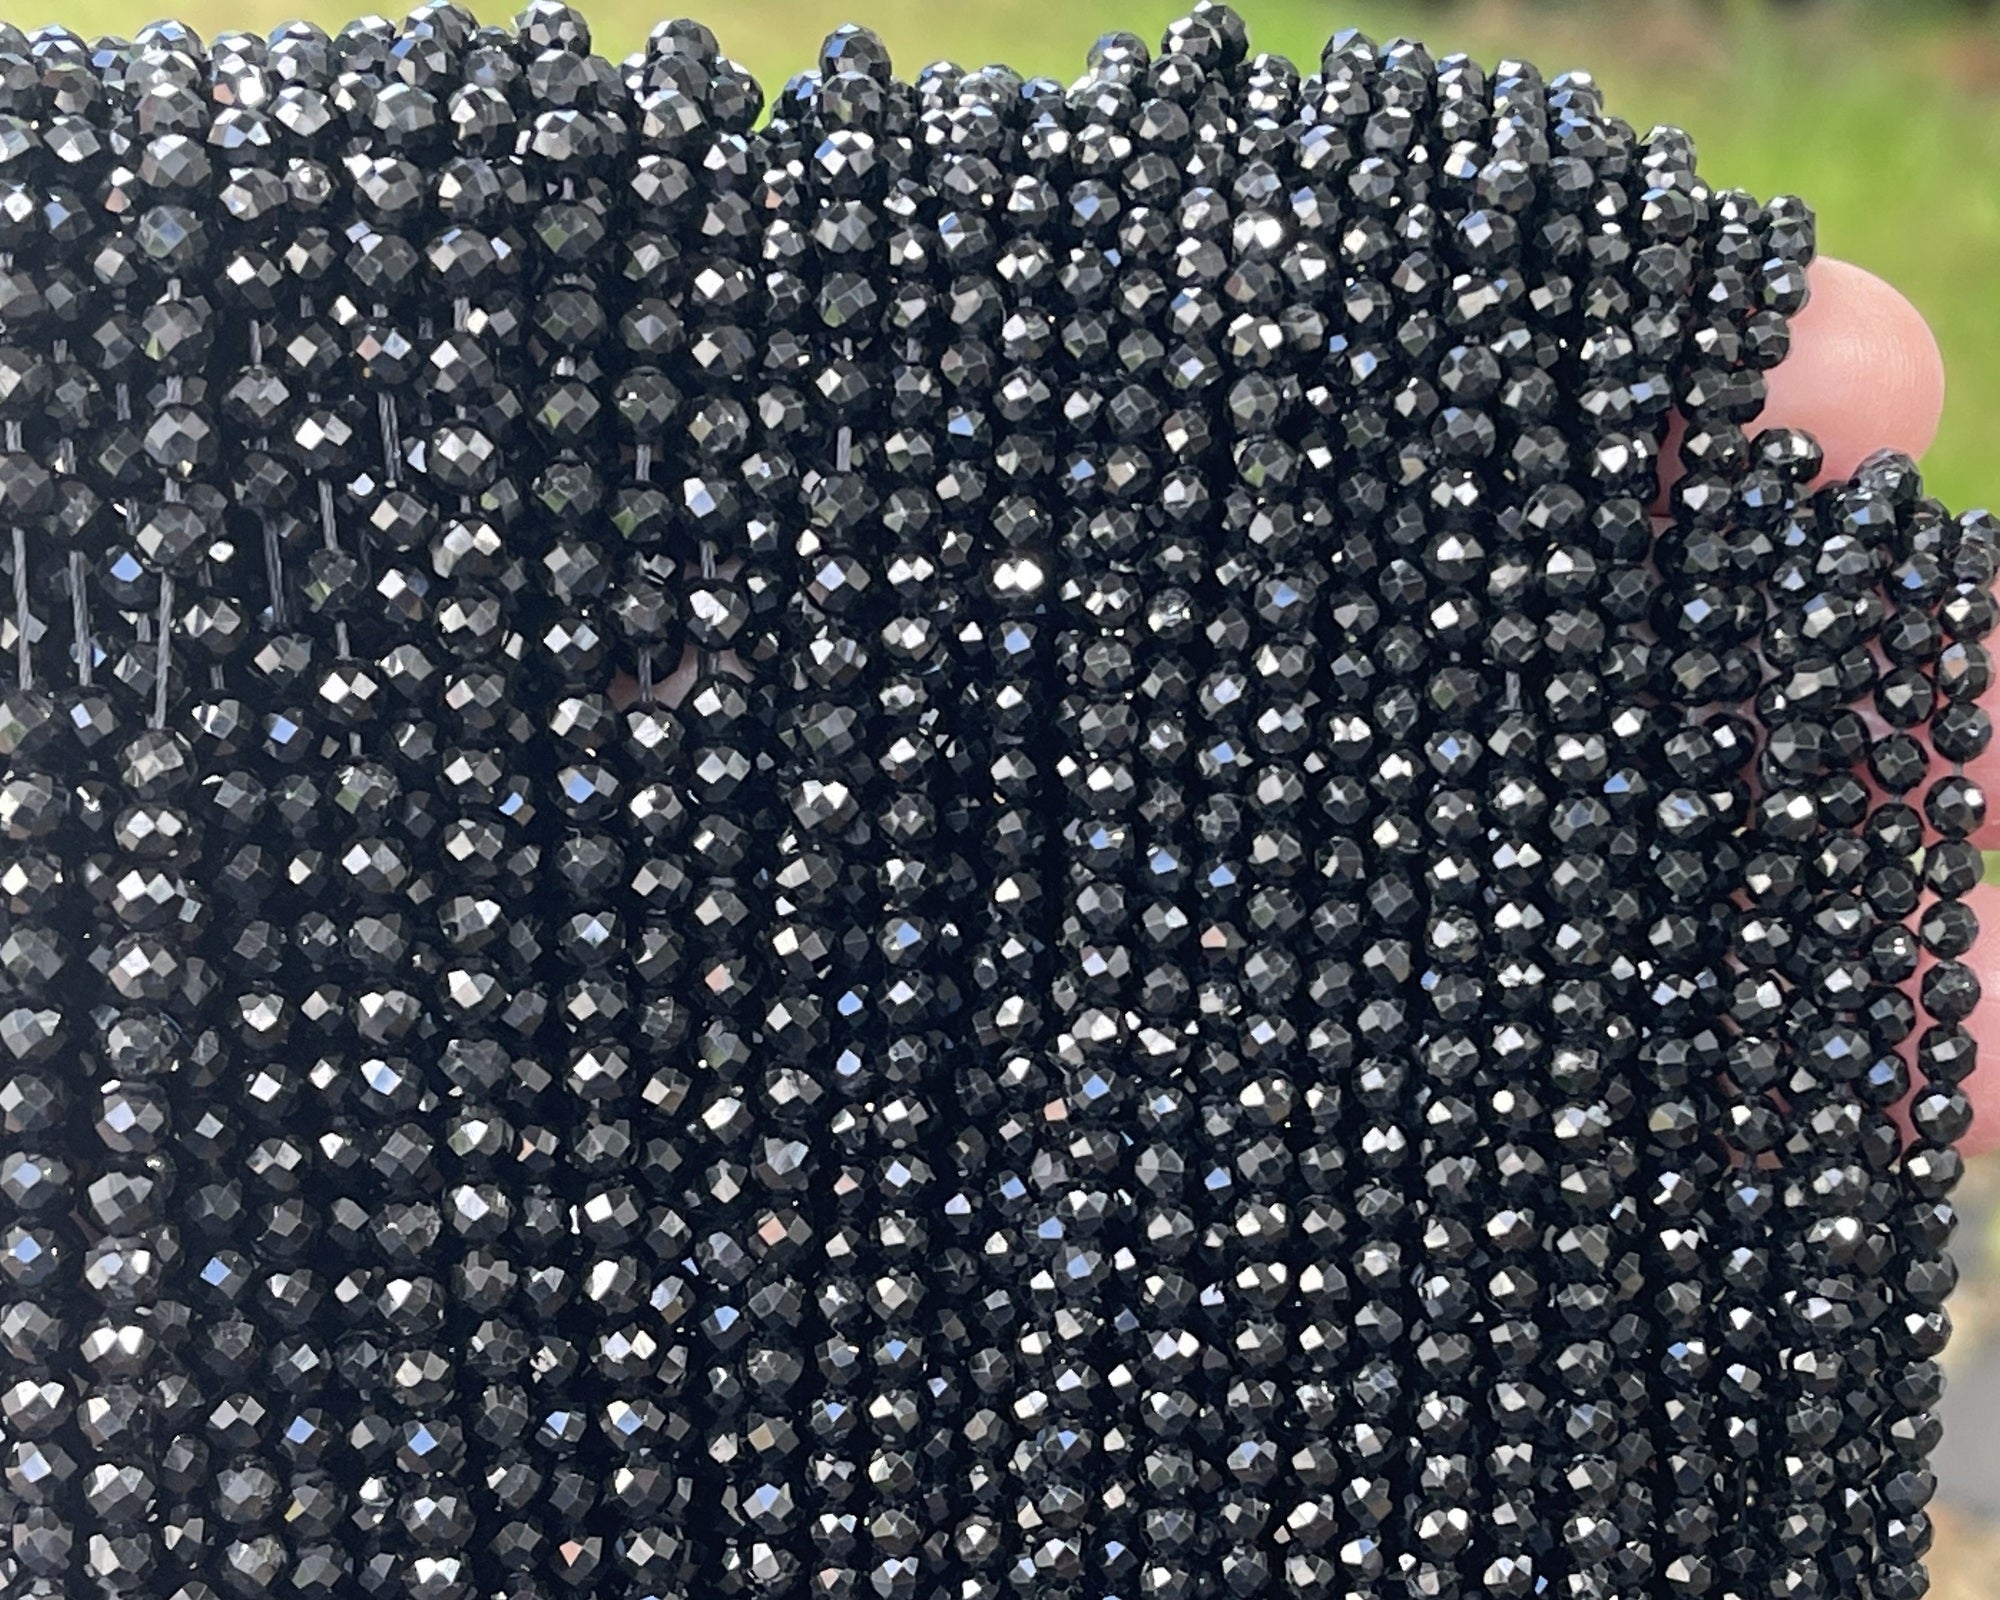 Black Tourmaline 3mm 4mm faceted round natural gemstone beads 15.5" strand